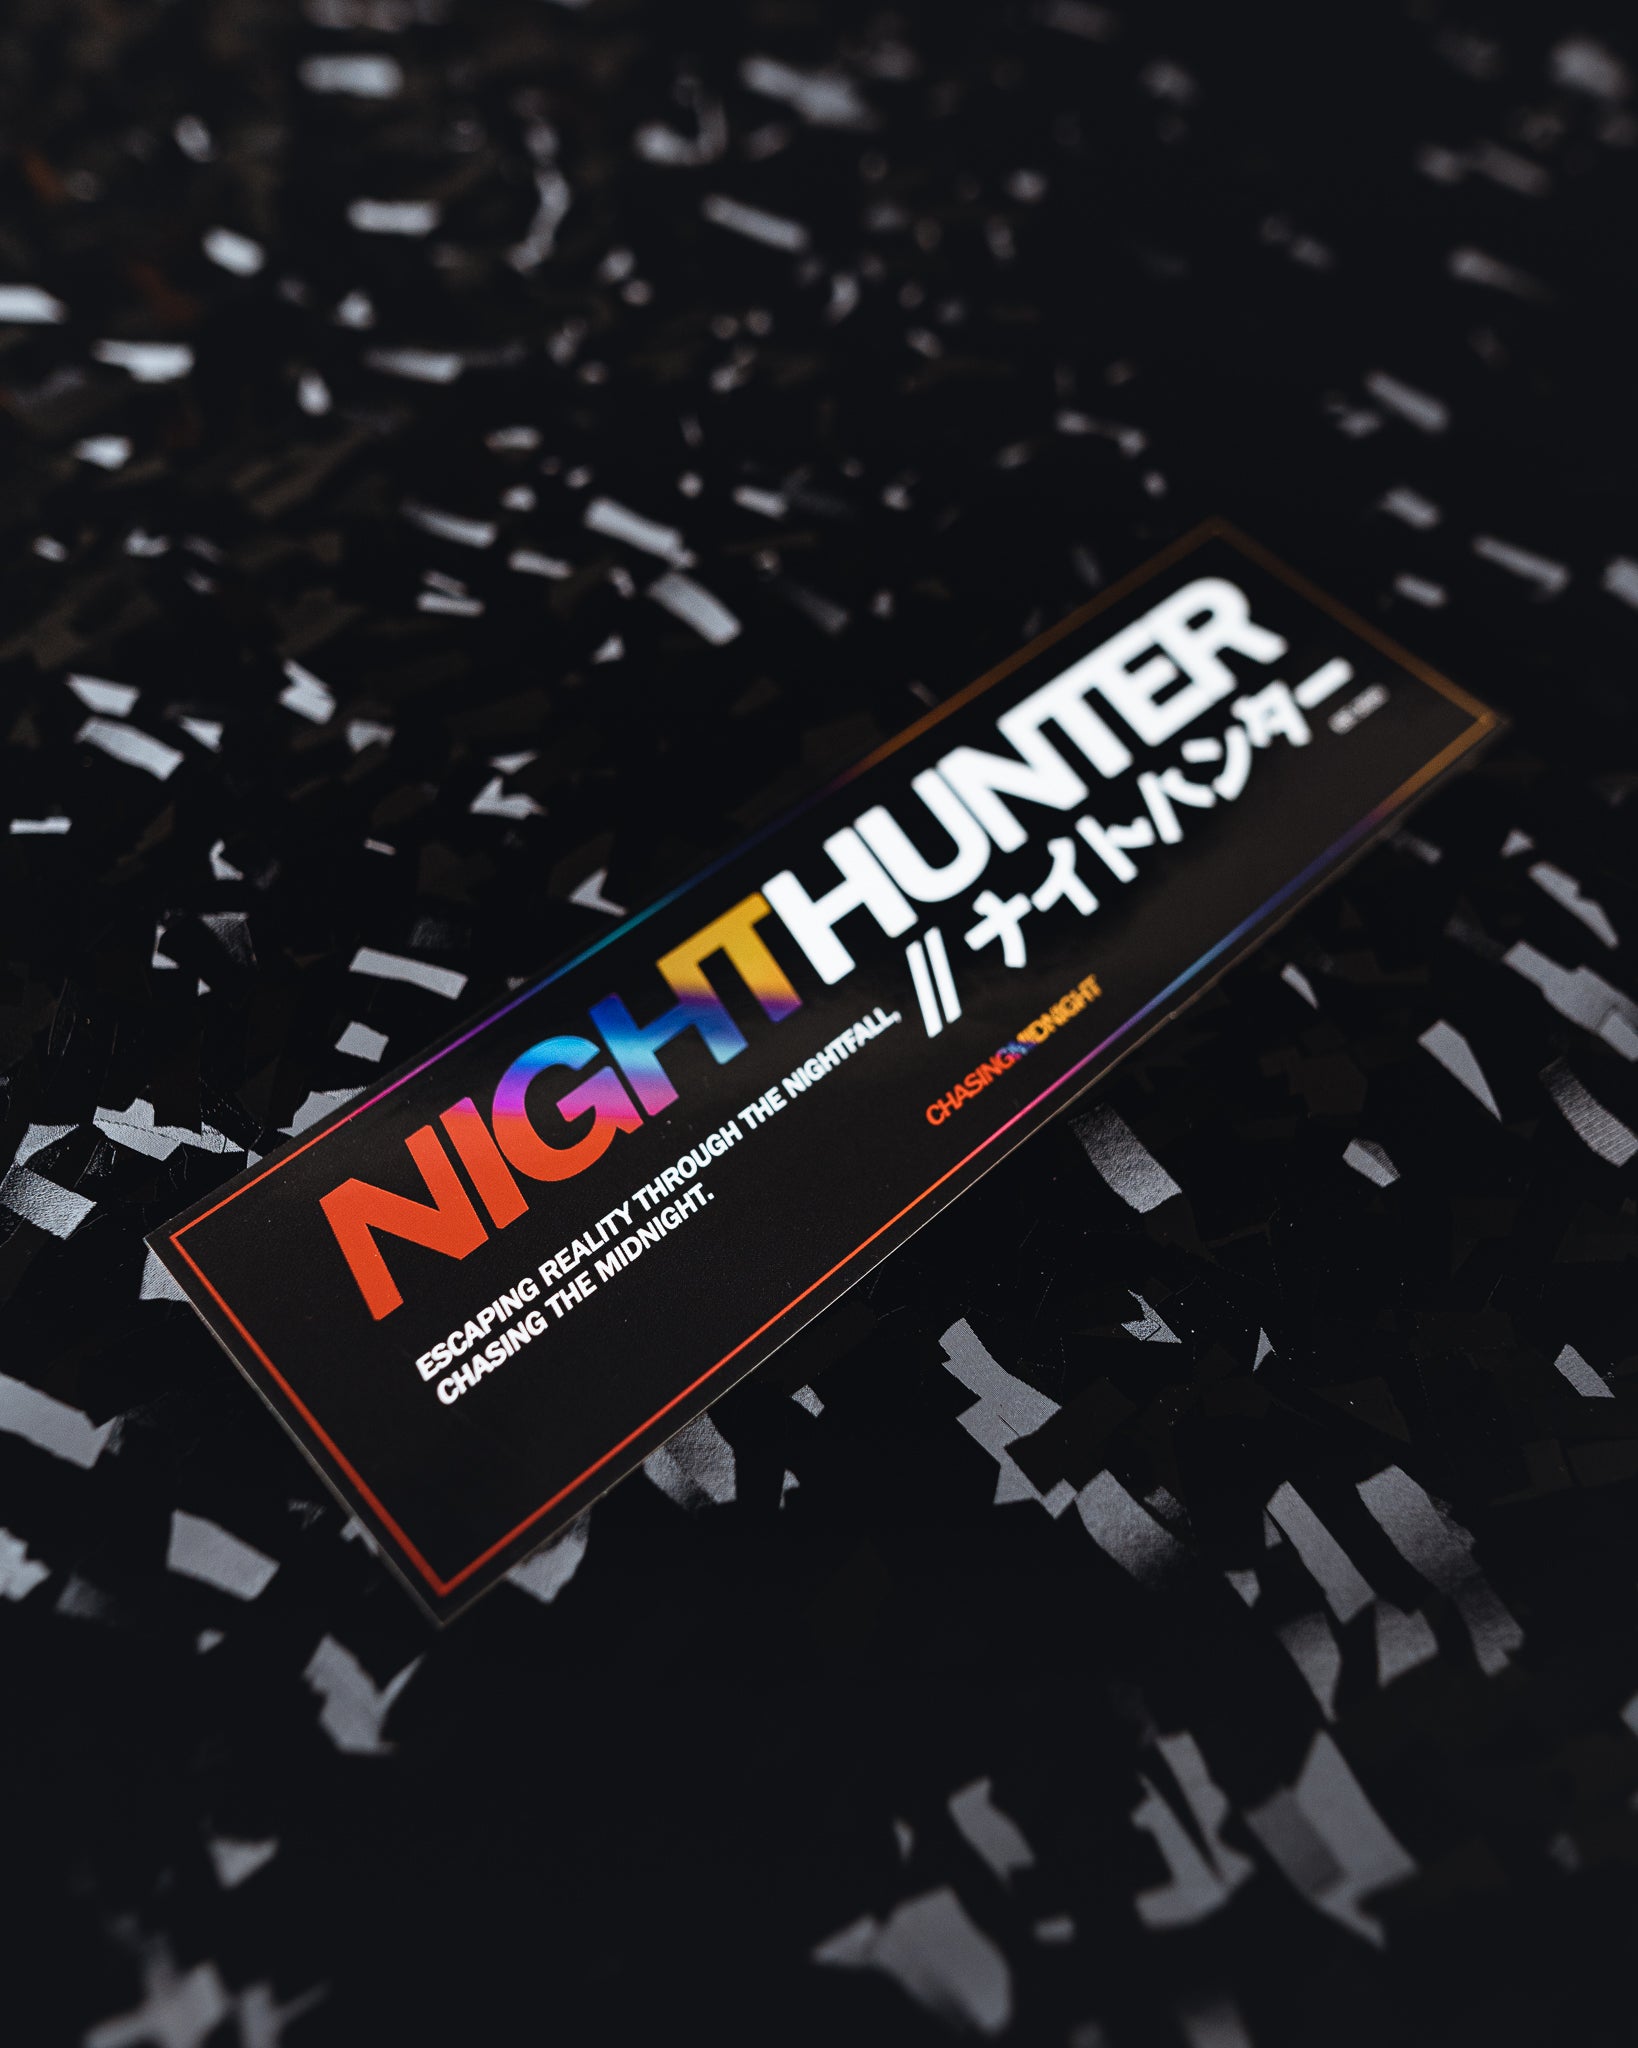 NIGHTHUNTER HOLOGRAPHIC BUMPER STICKER